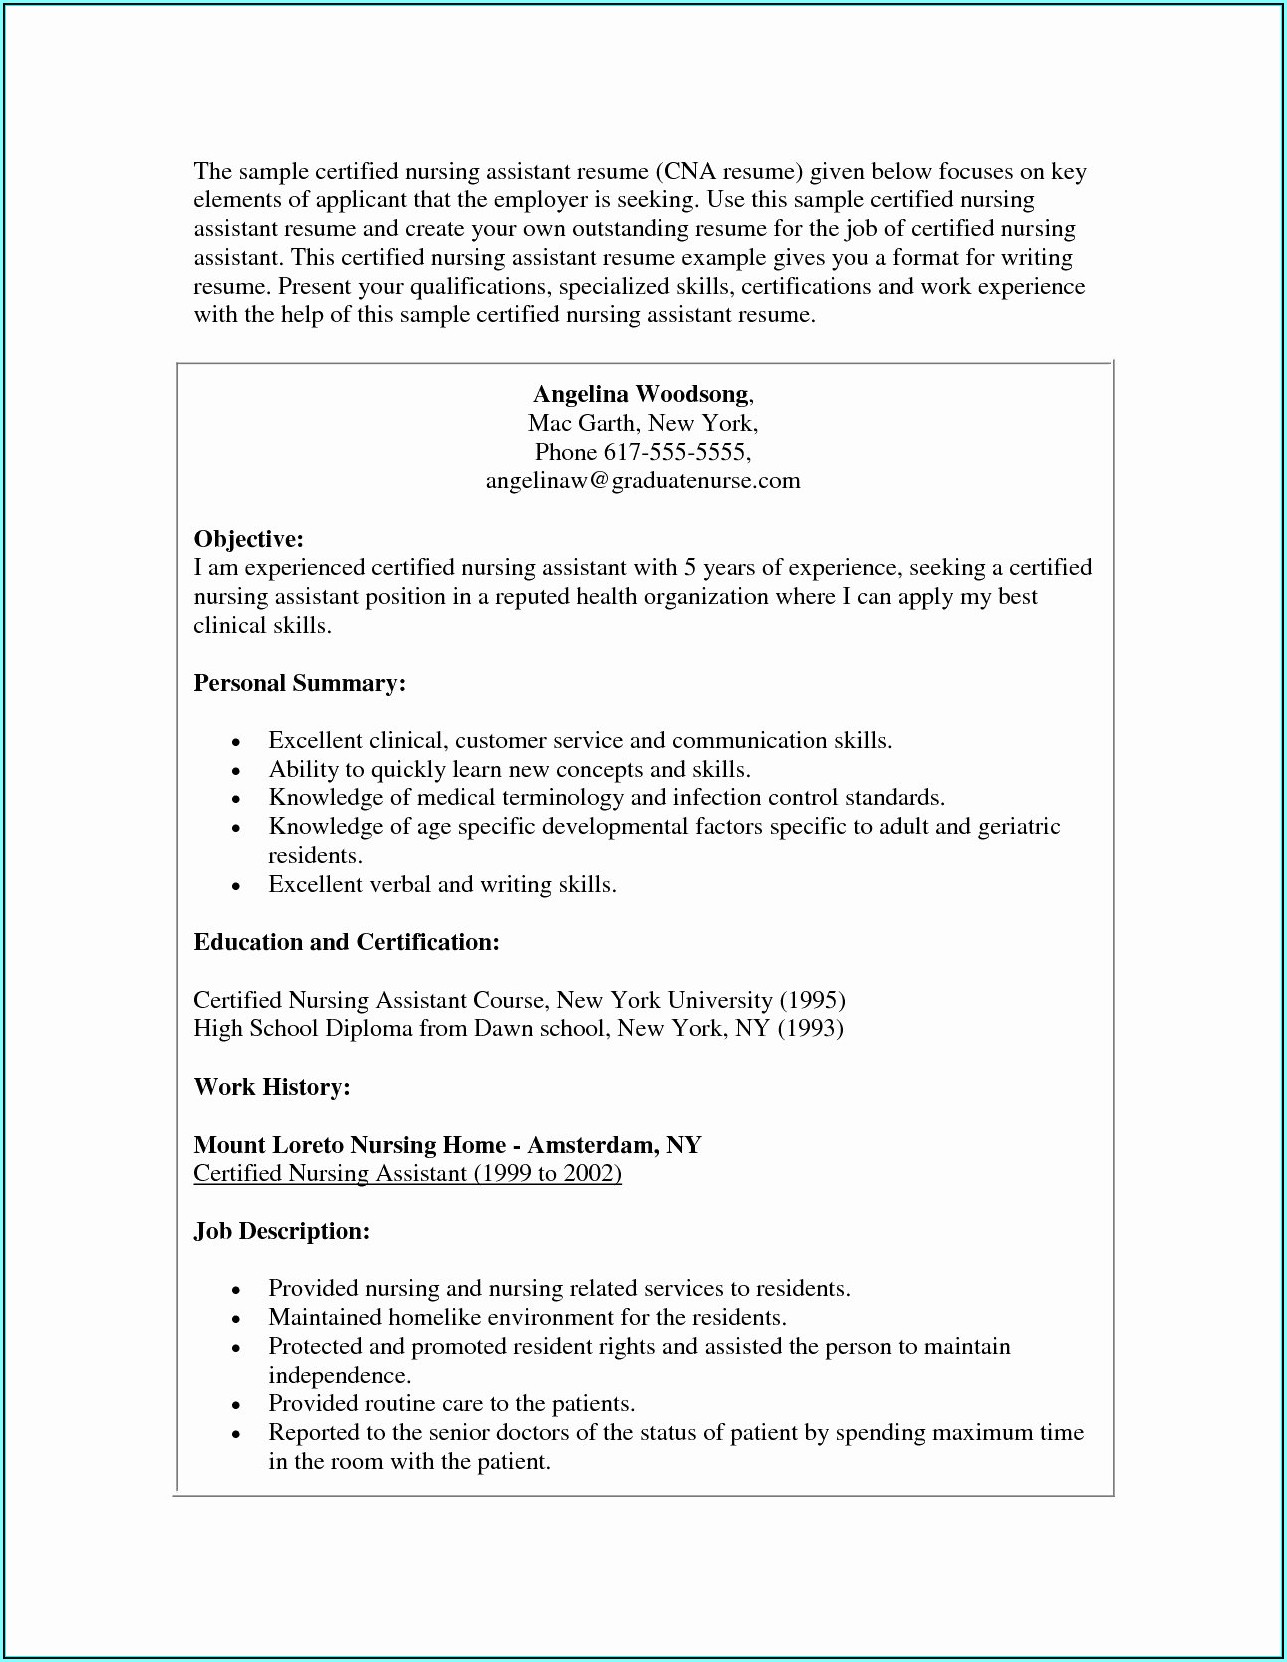 Resume Template Nursing Cna